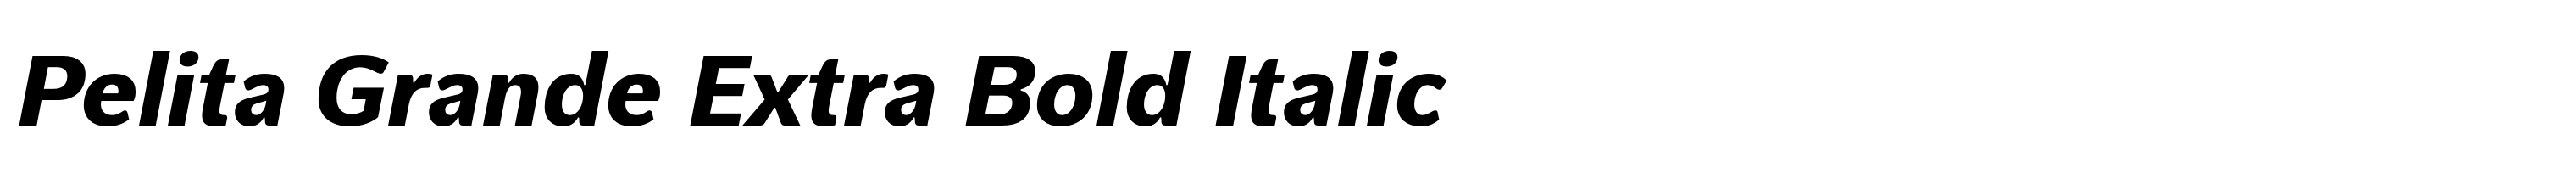 Pelita Grande Extra Bold Italic